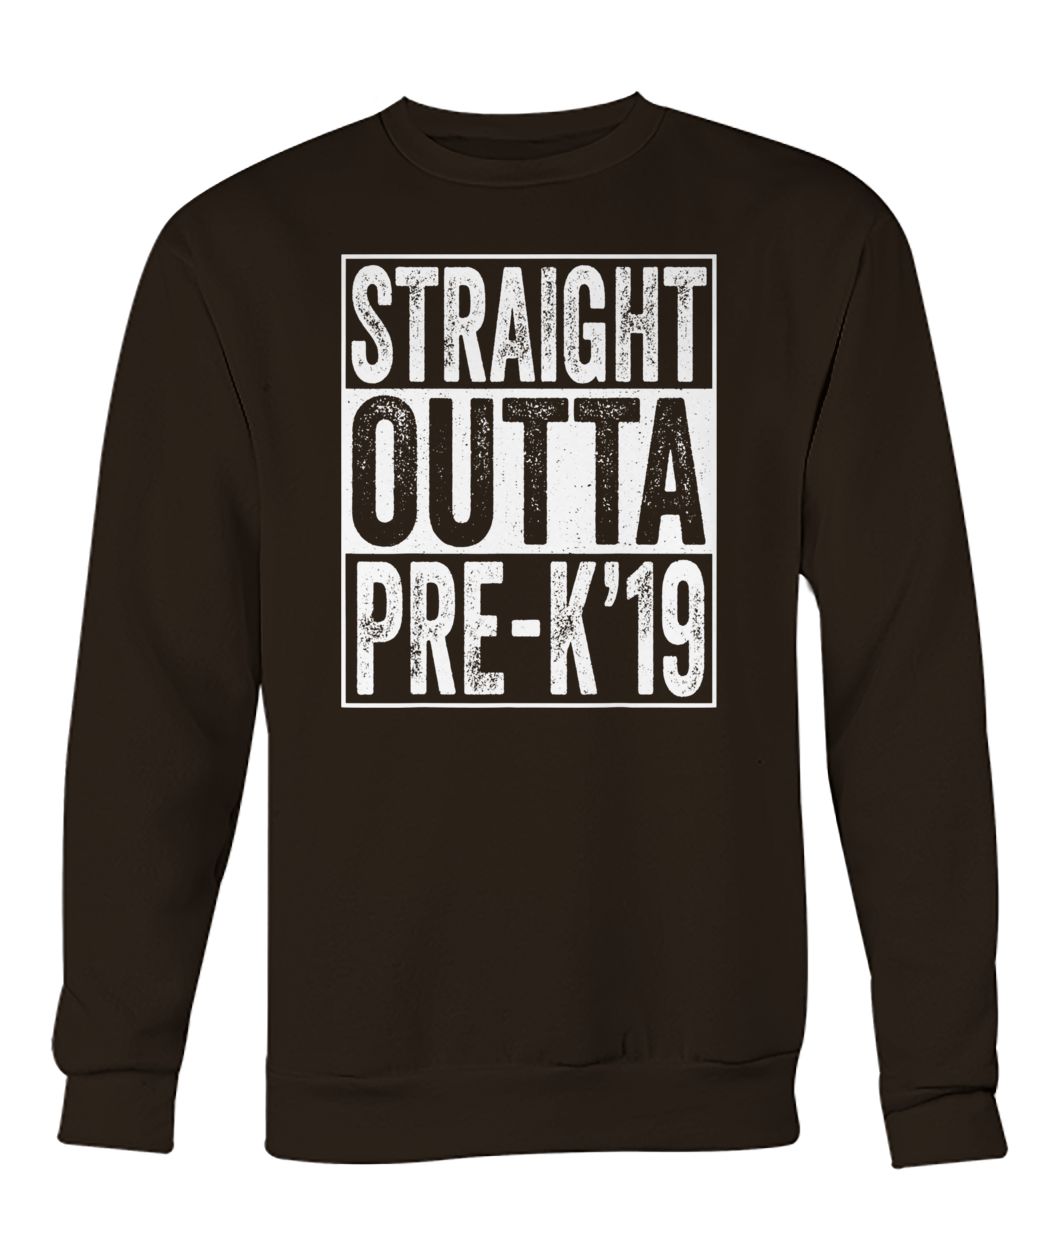 Straight outta pre-k 2019 preschool graduation crew neck sweatshirt